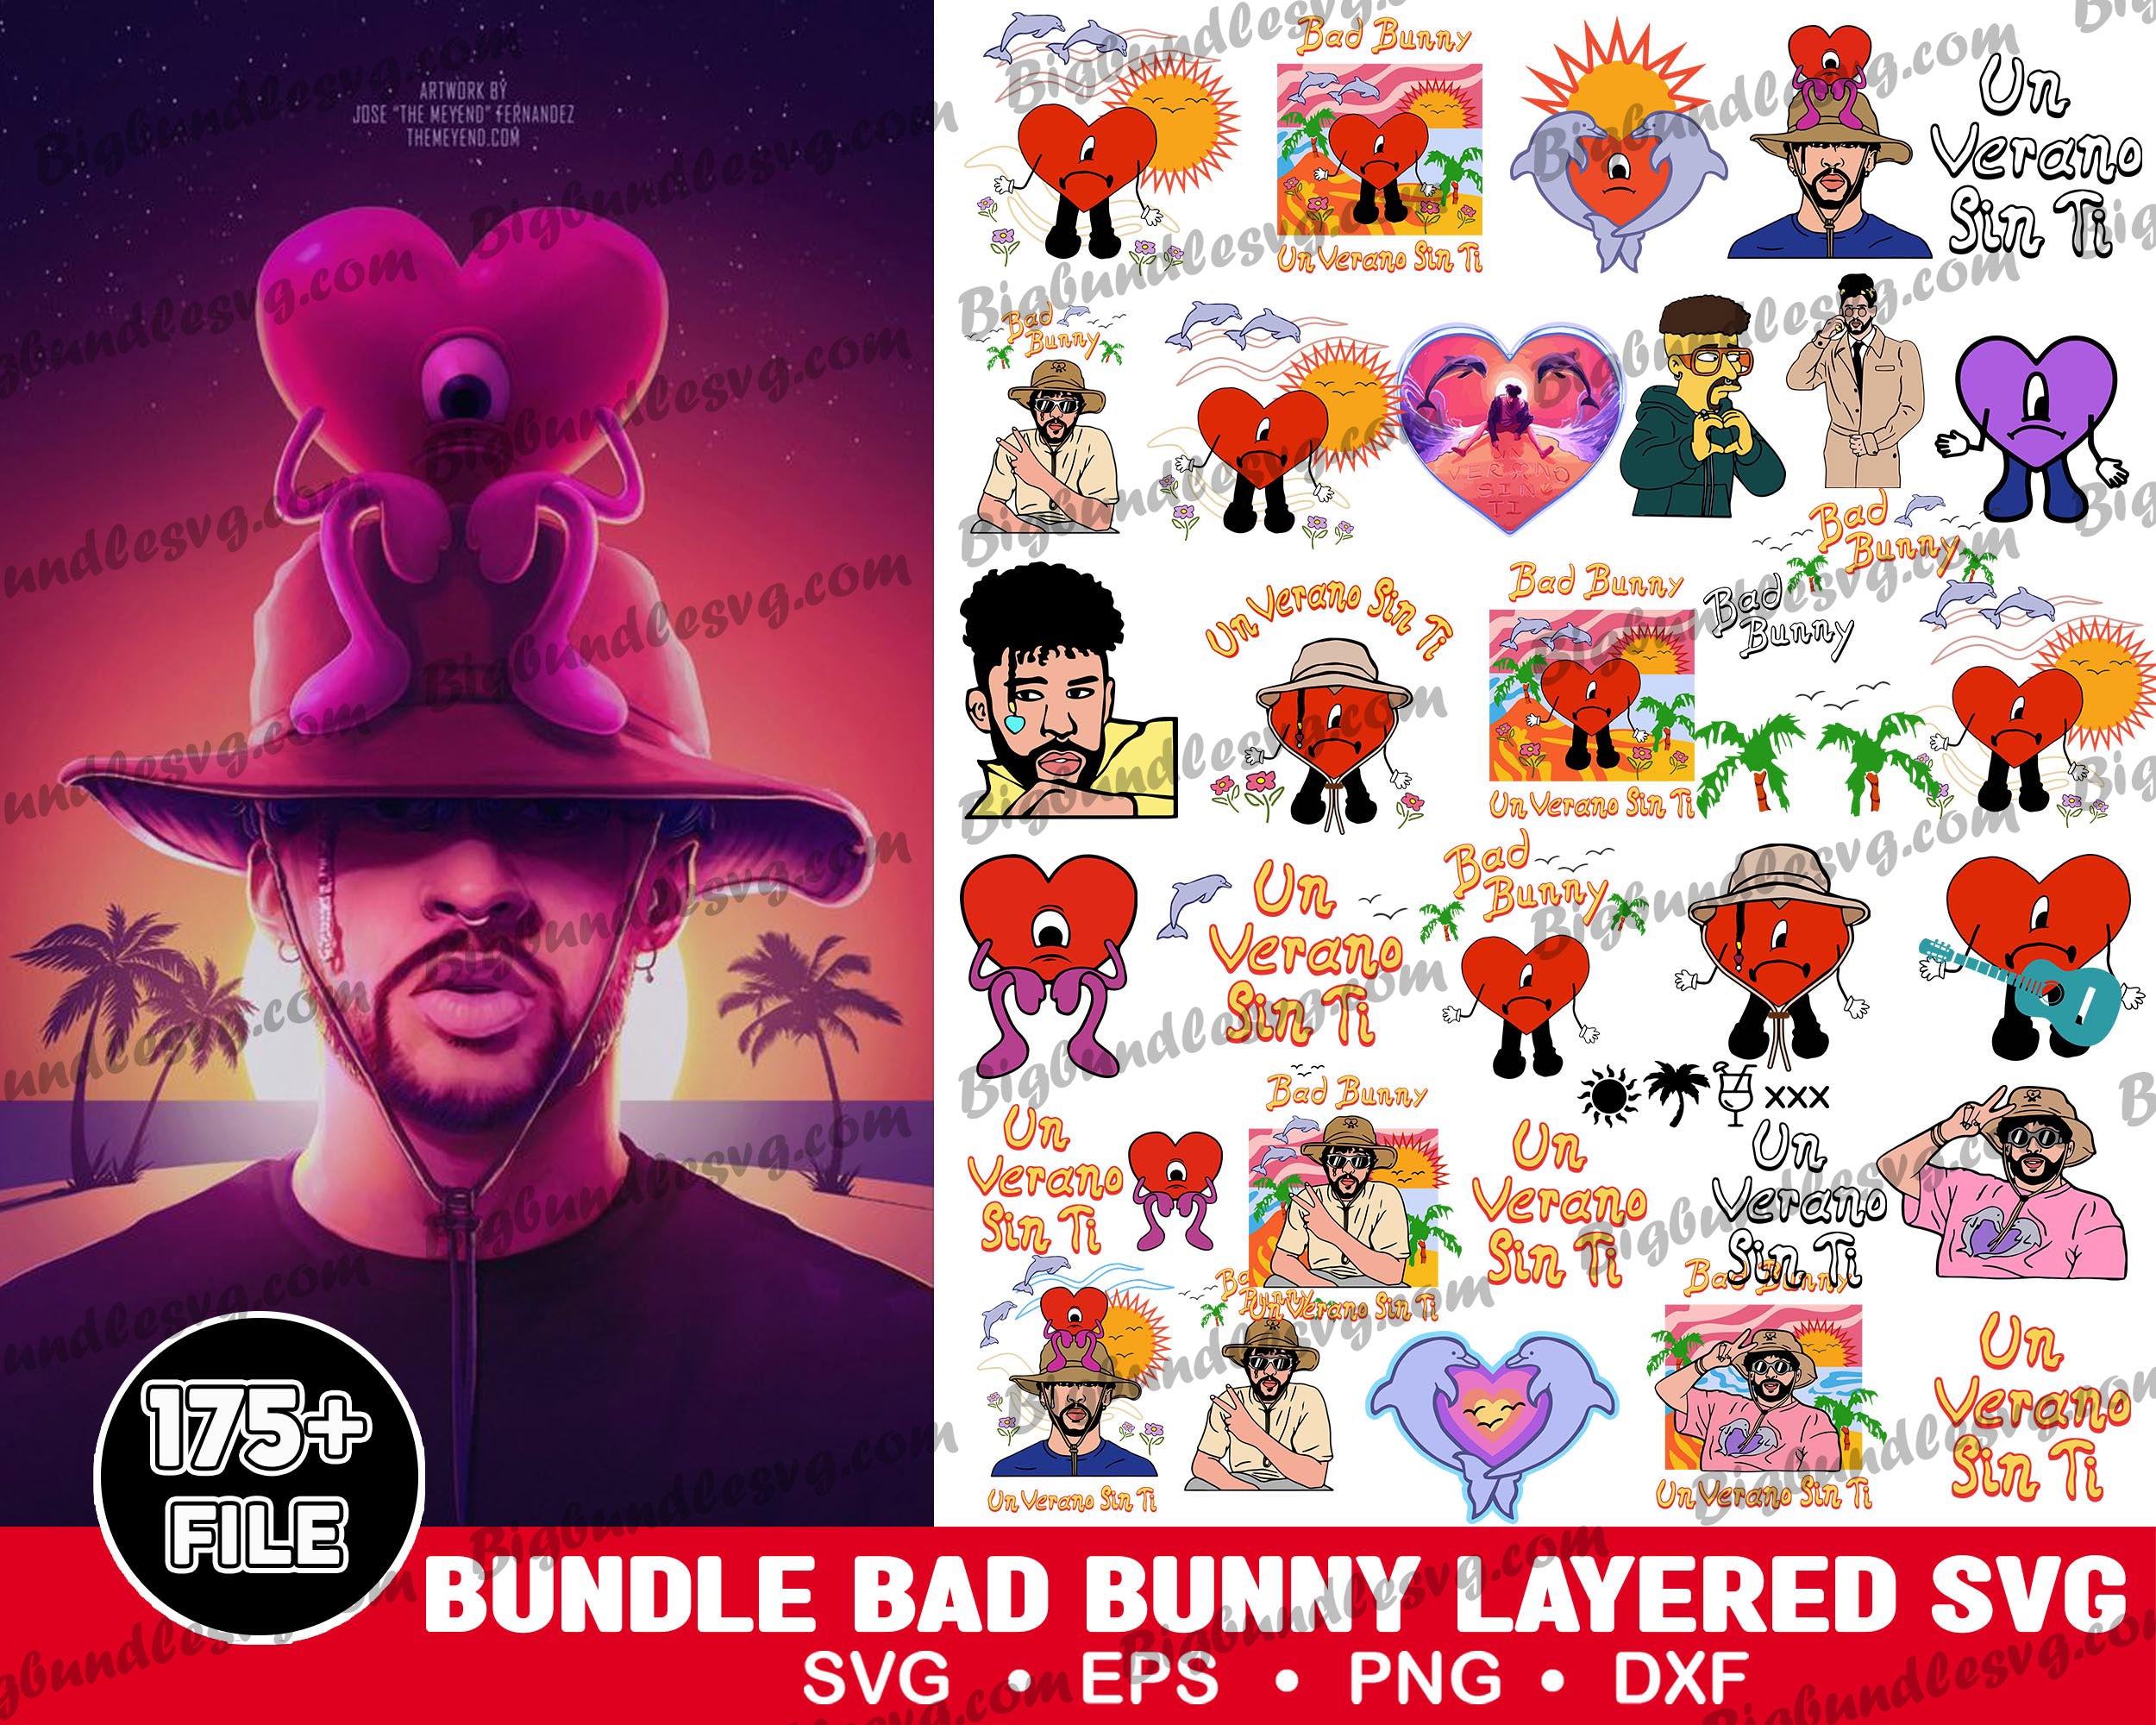 Bad Bunny SVG, Bundle bad bunny layered svg